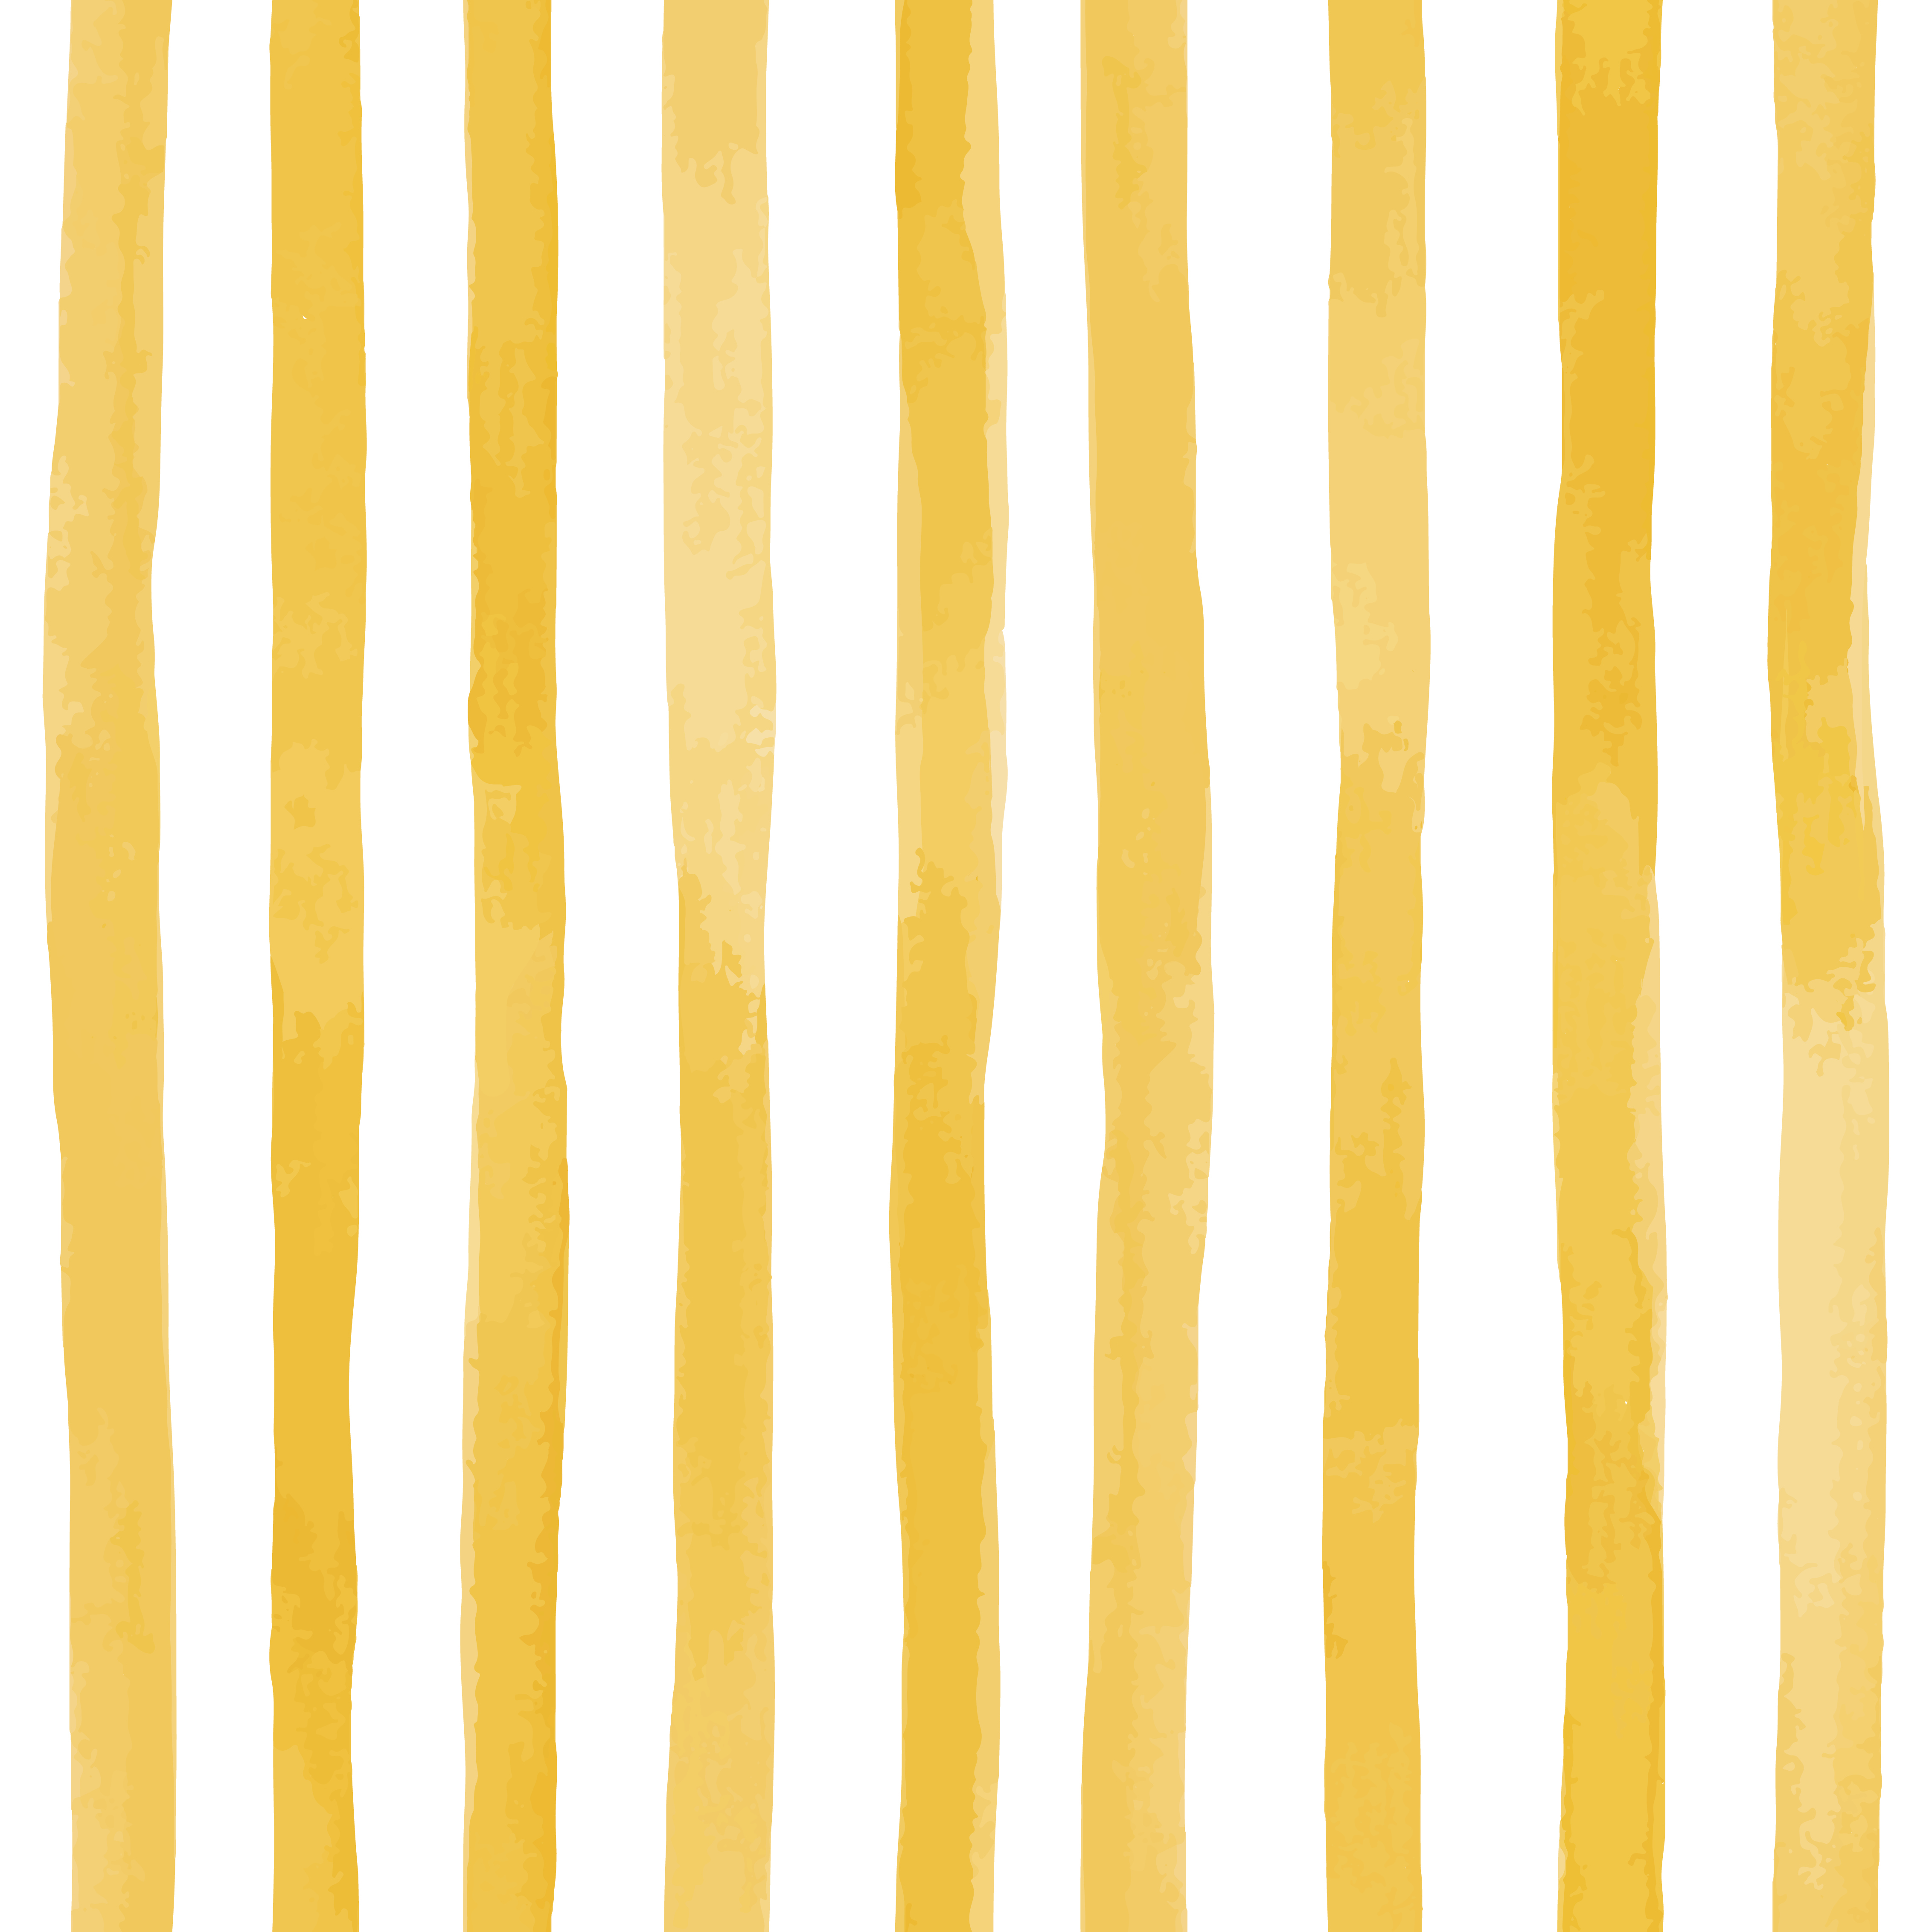 Free Orange and Yellow Striped background Image